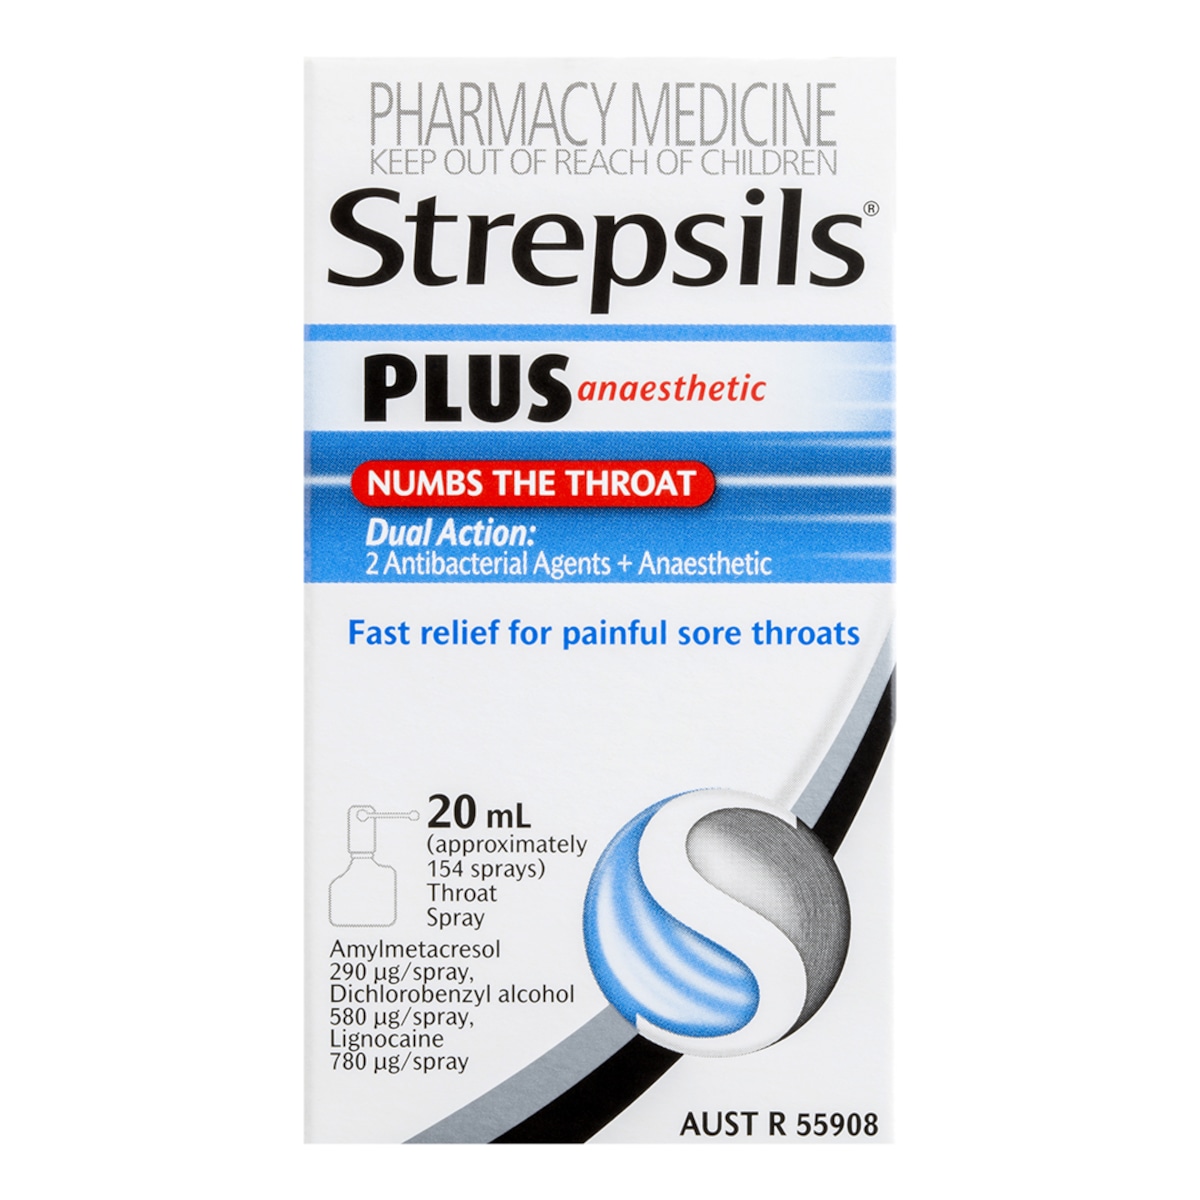 Strepsils Plus Anaesthetic Sore Throat Numbing Pain Relief Spray 20ml